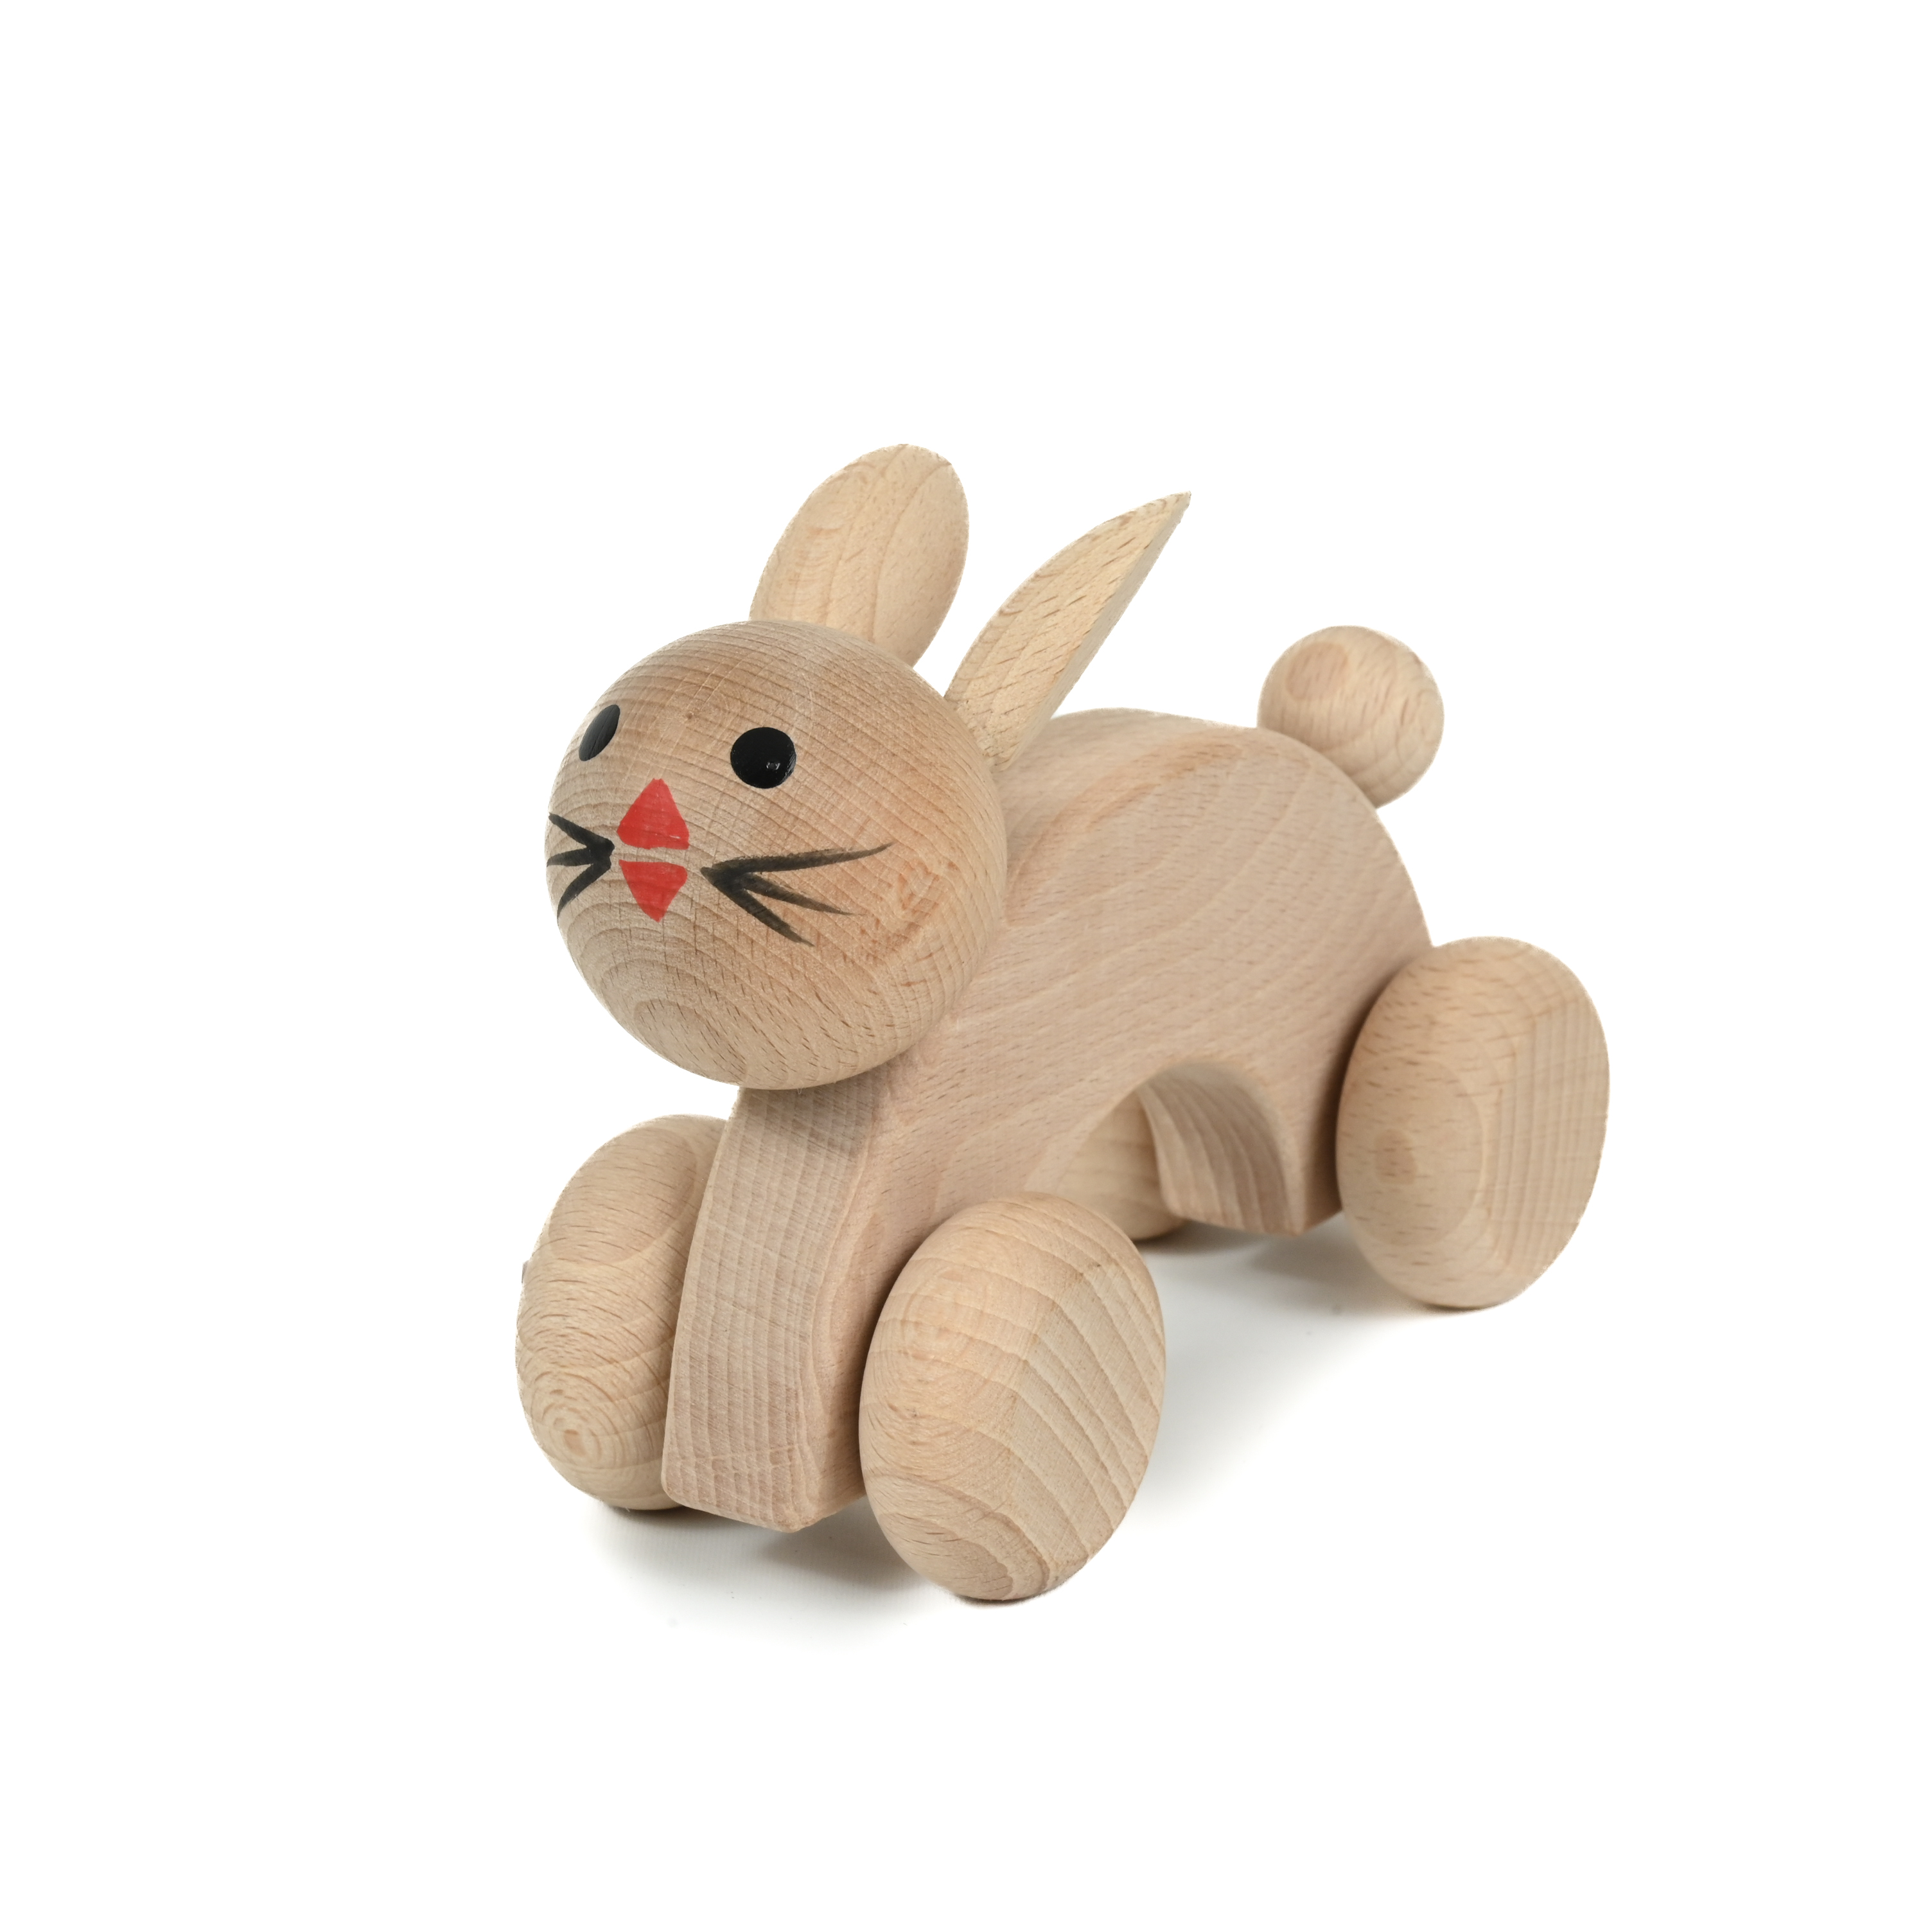 Cook & Butler Wooden Push-Along Toy / Rabbit